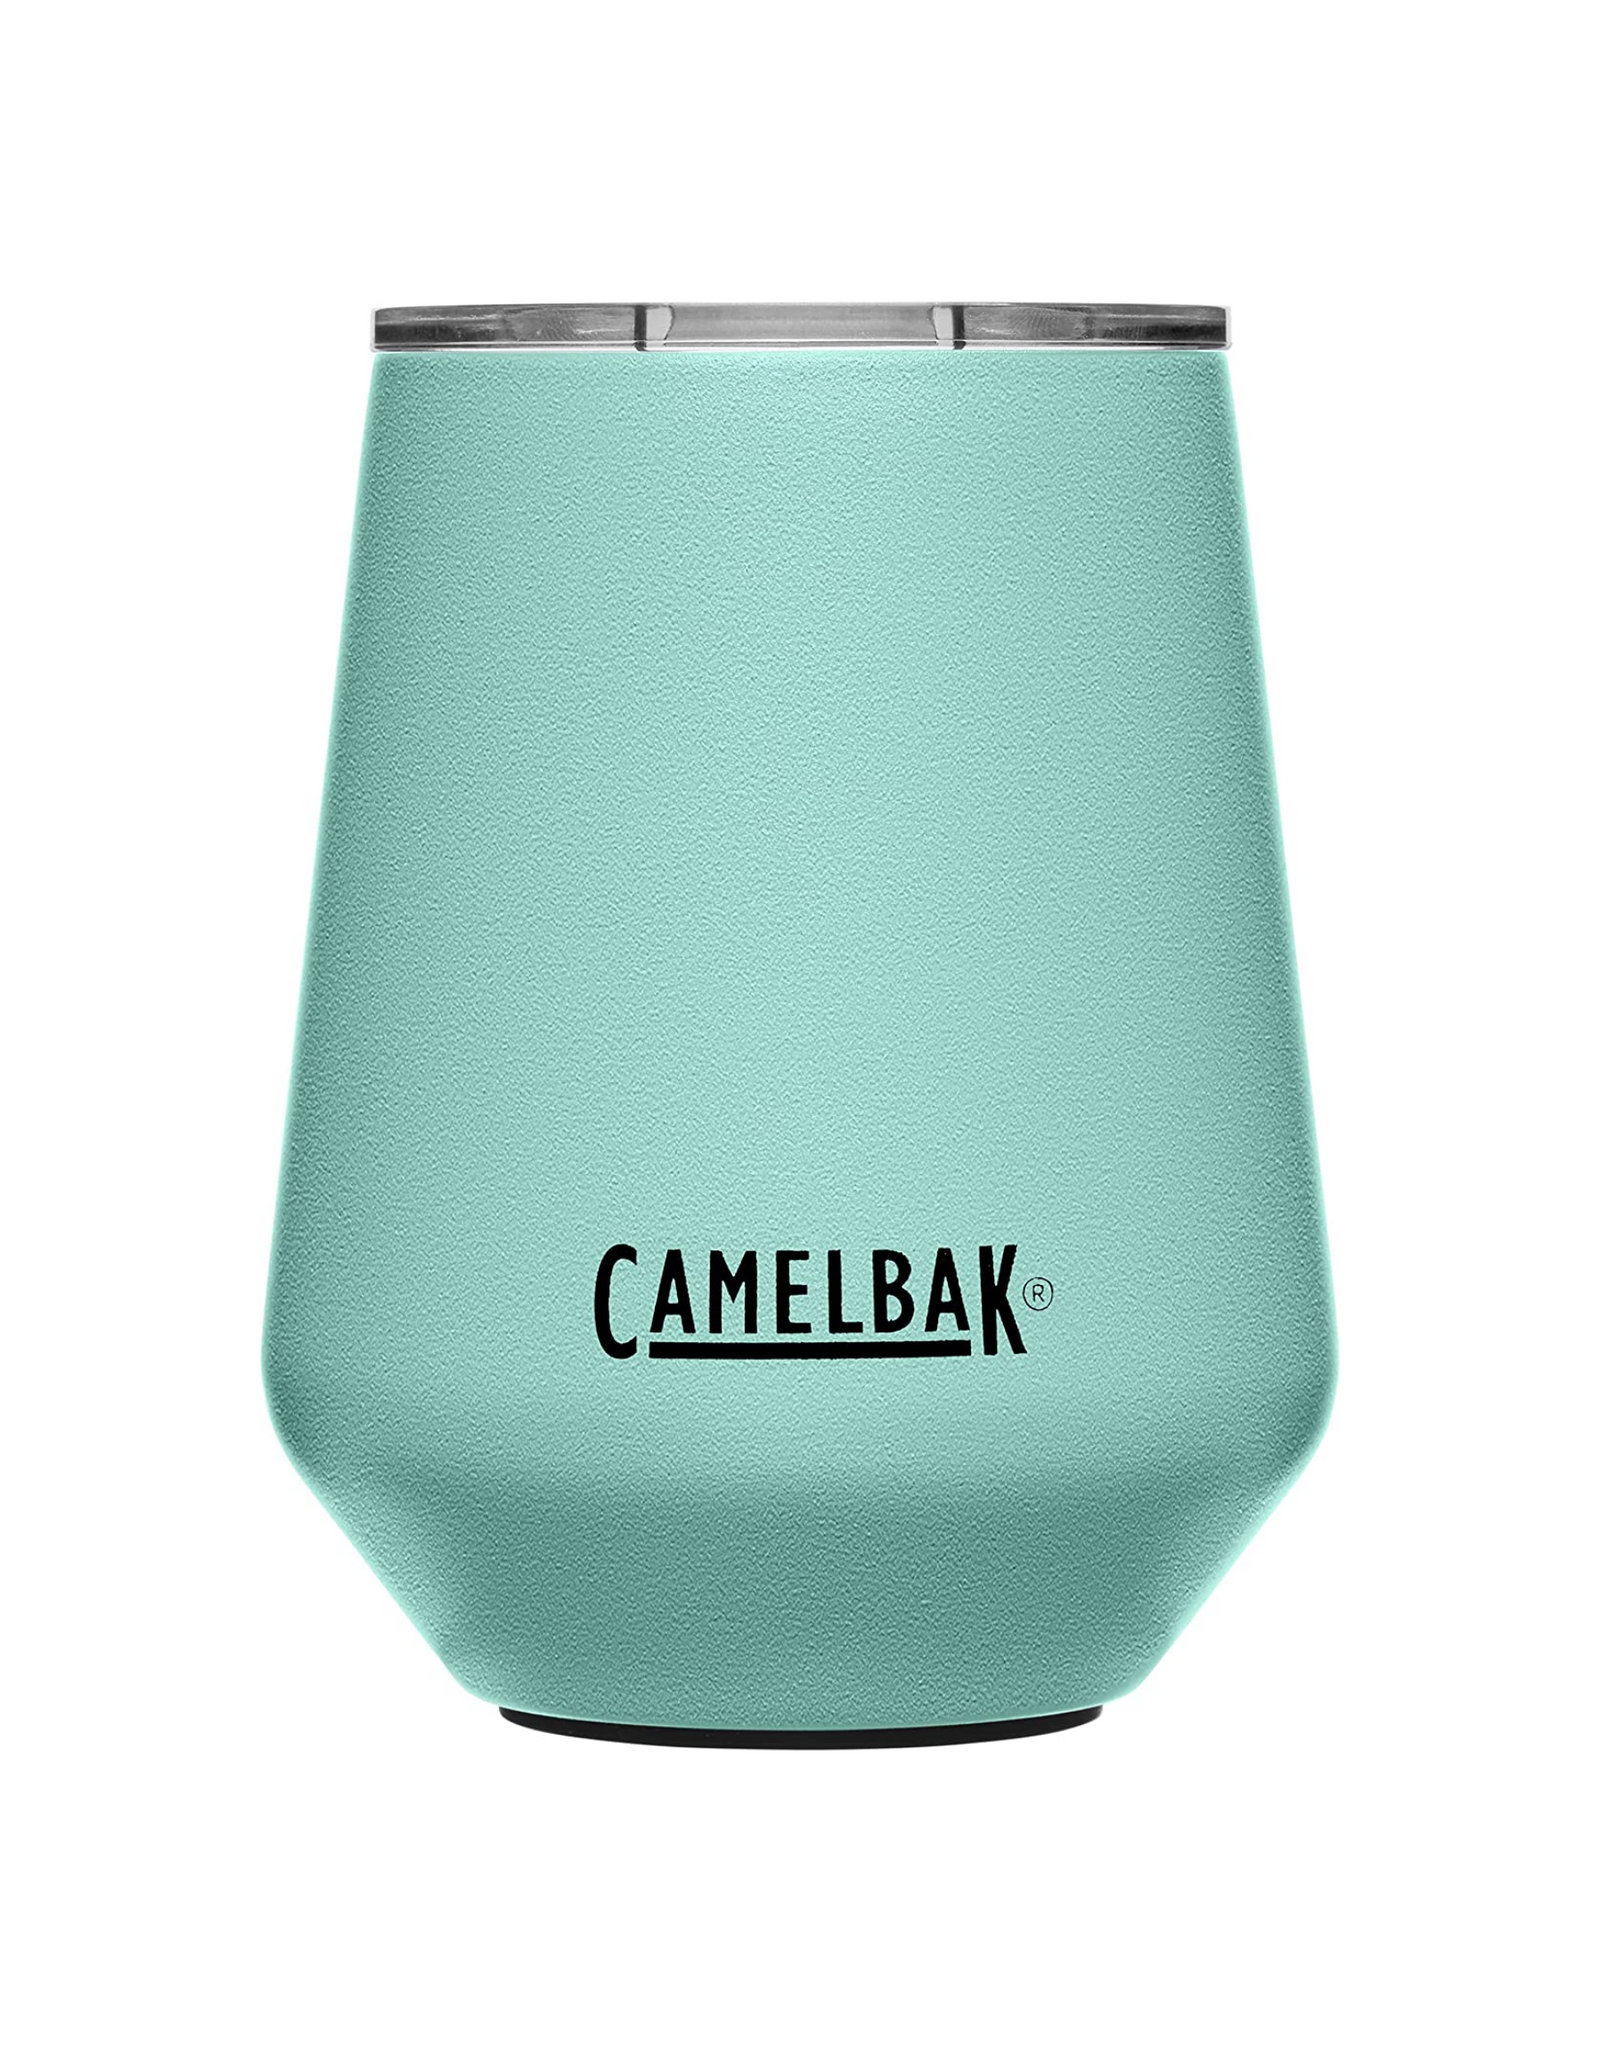 CamelBak Horizon 12 oz Wine Tumbler, Tri-Mode Lid, Insulated Stainless Steel, Coastal